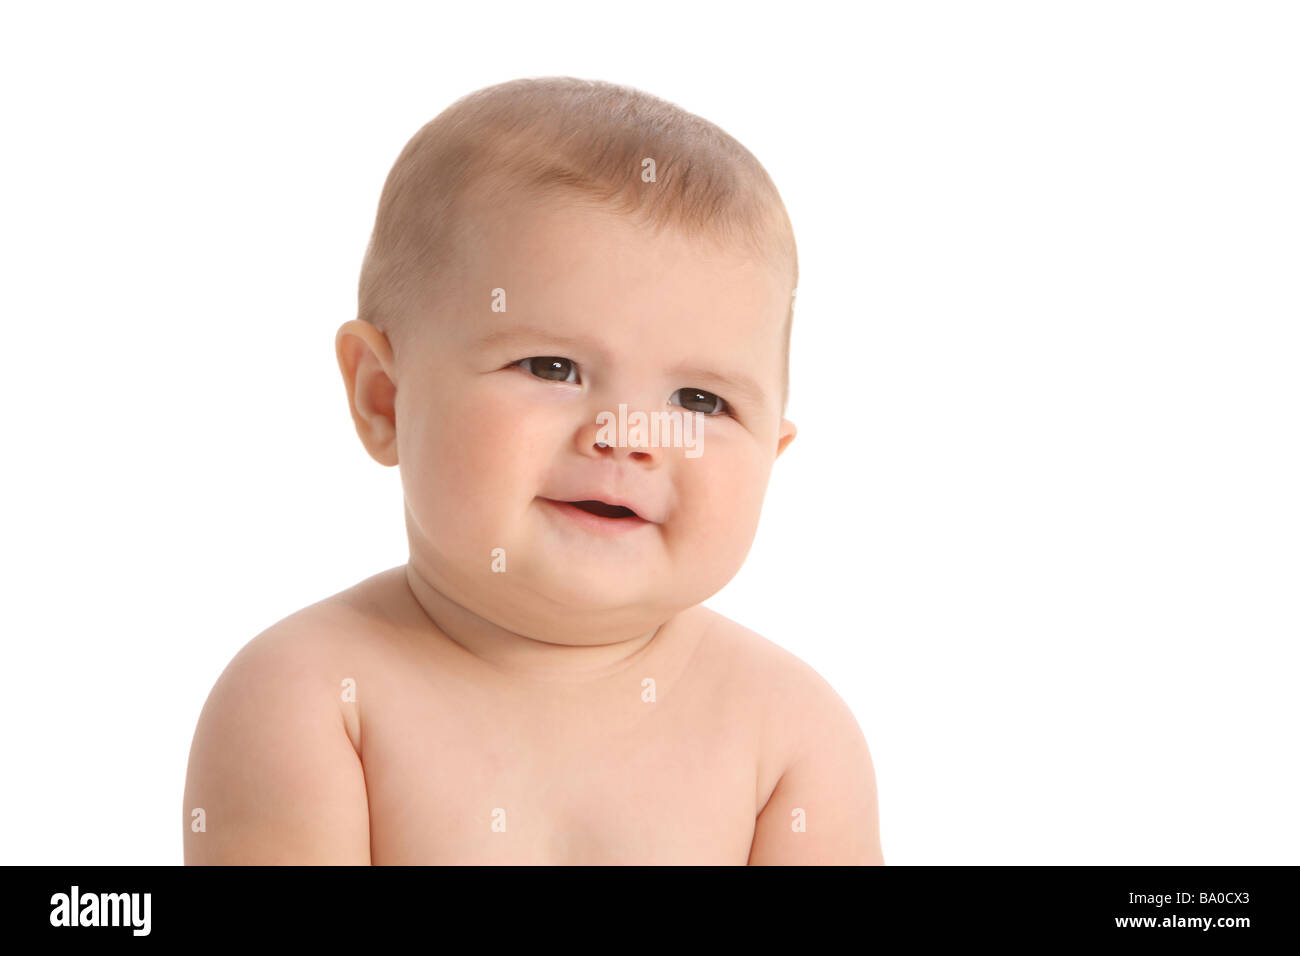 Baby on white background Stock Photo